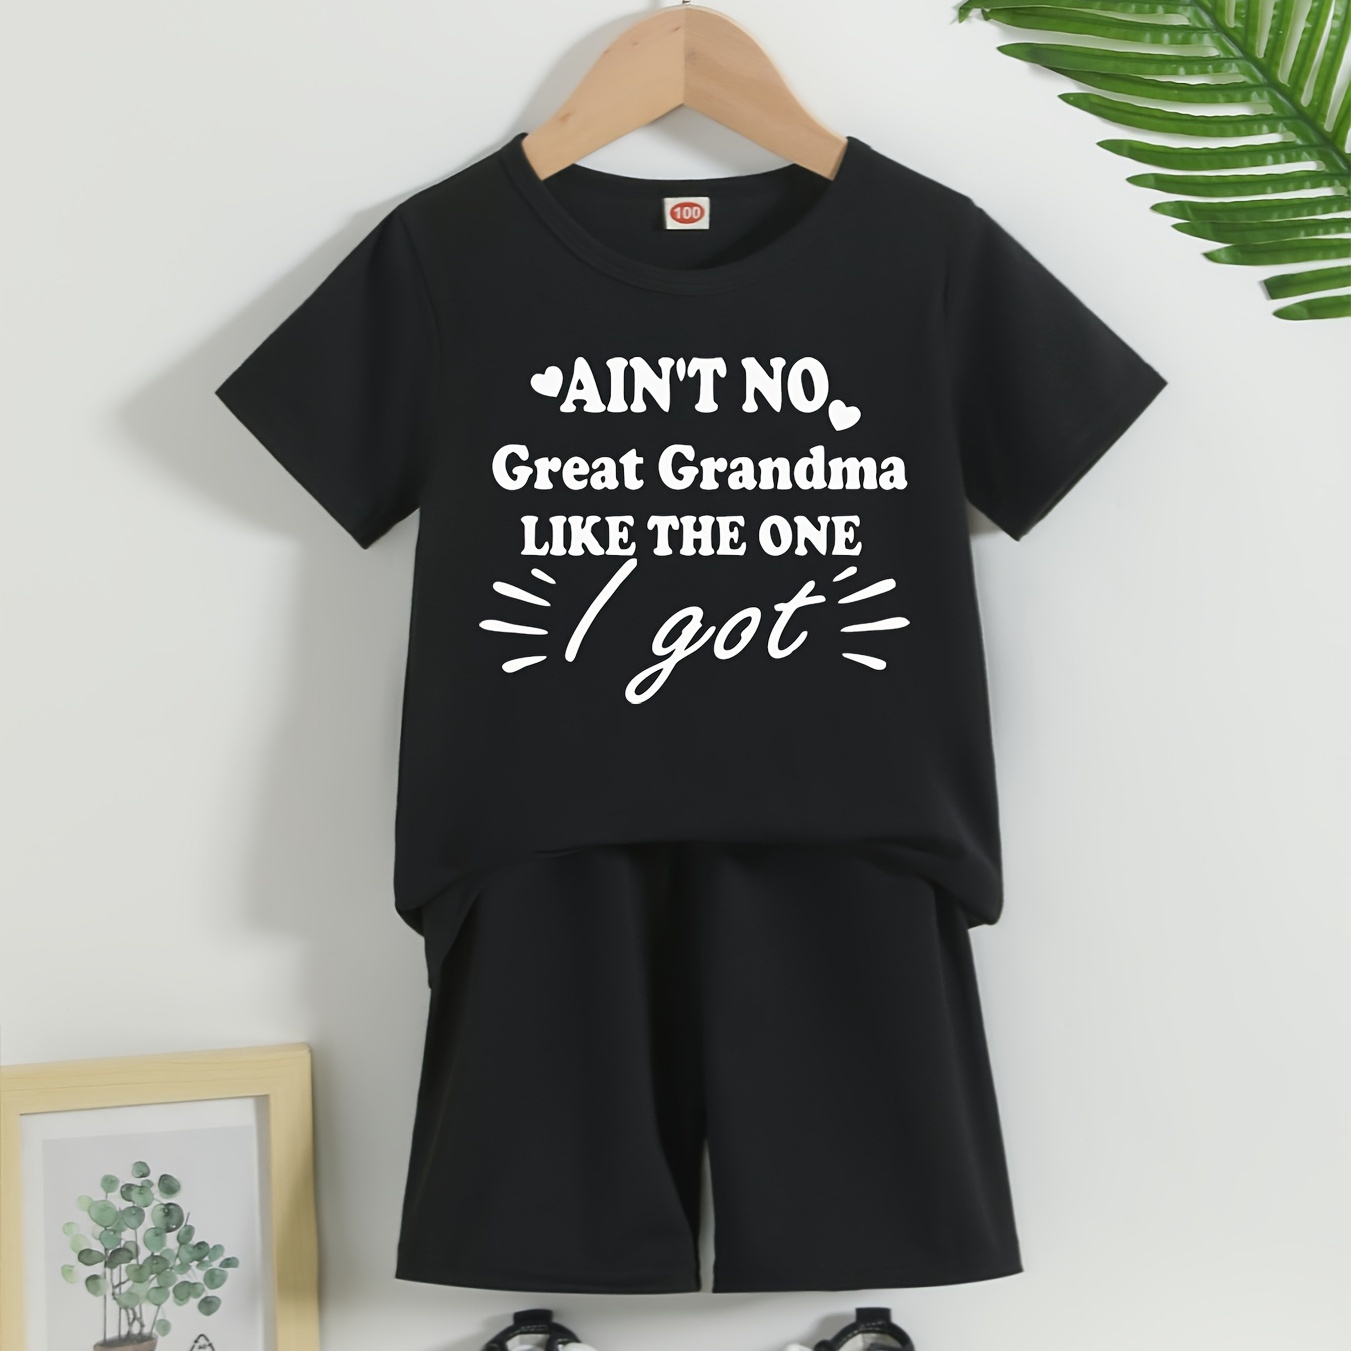 

Great Grandma Pattern Short Sleeve Casual T-shirt & Elastic Waist Shorts Set, Baby Boy's Comfortable Summer Outfits